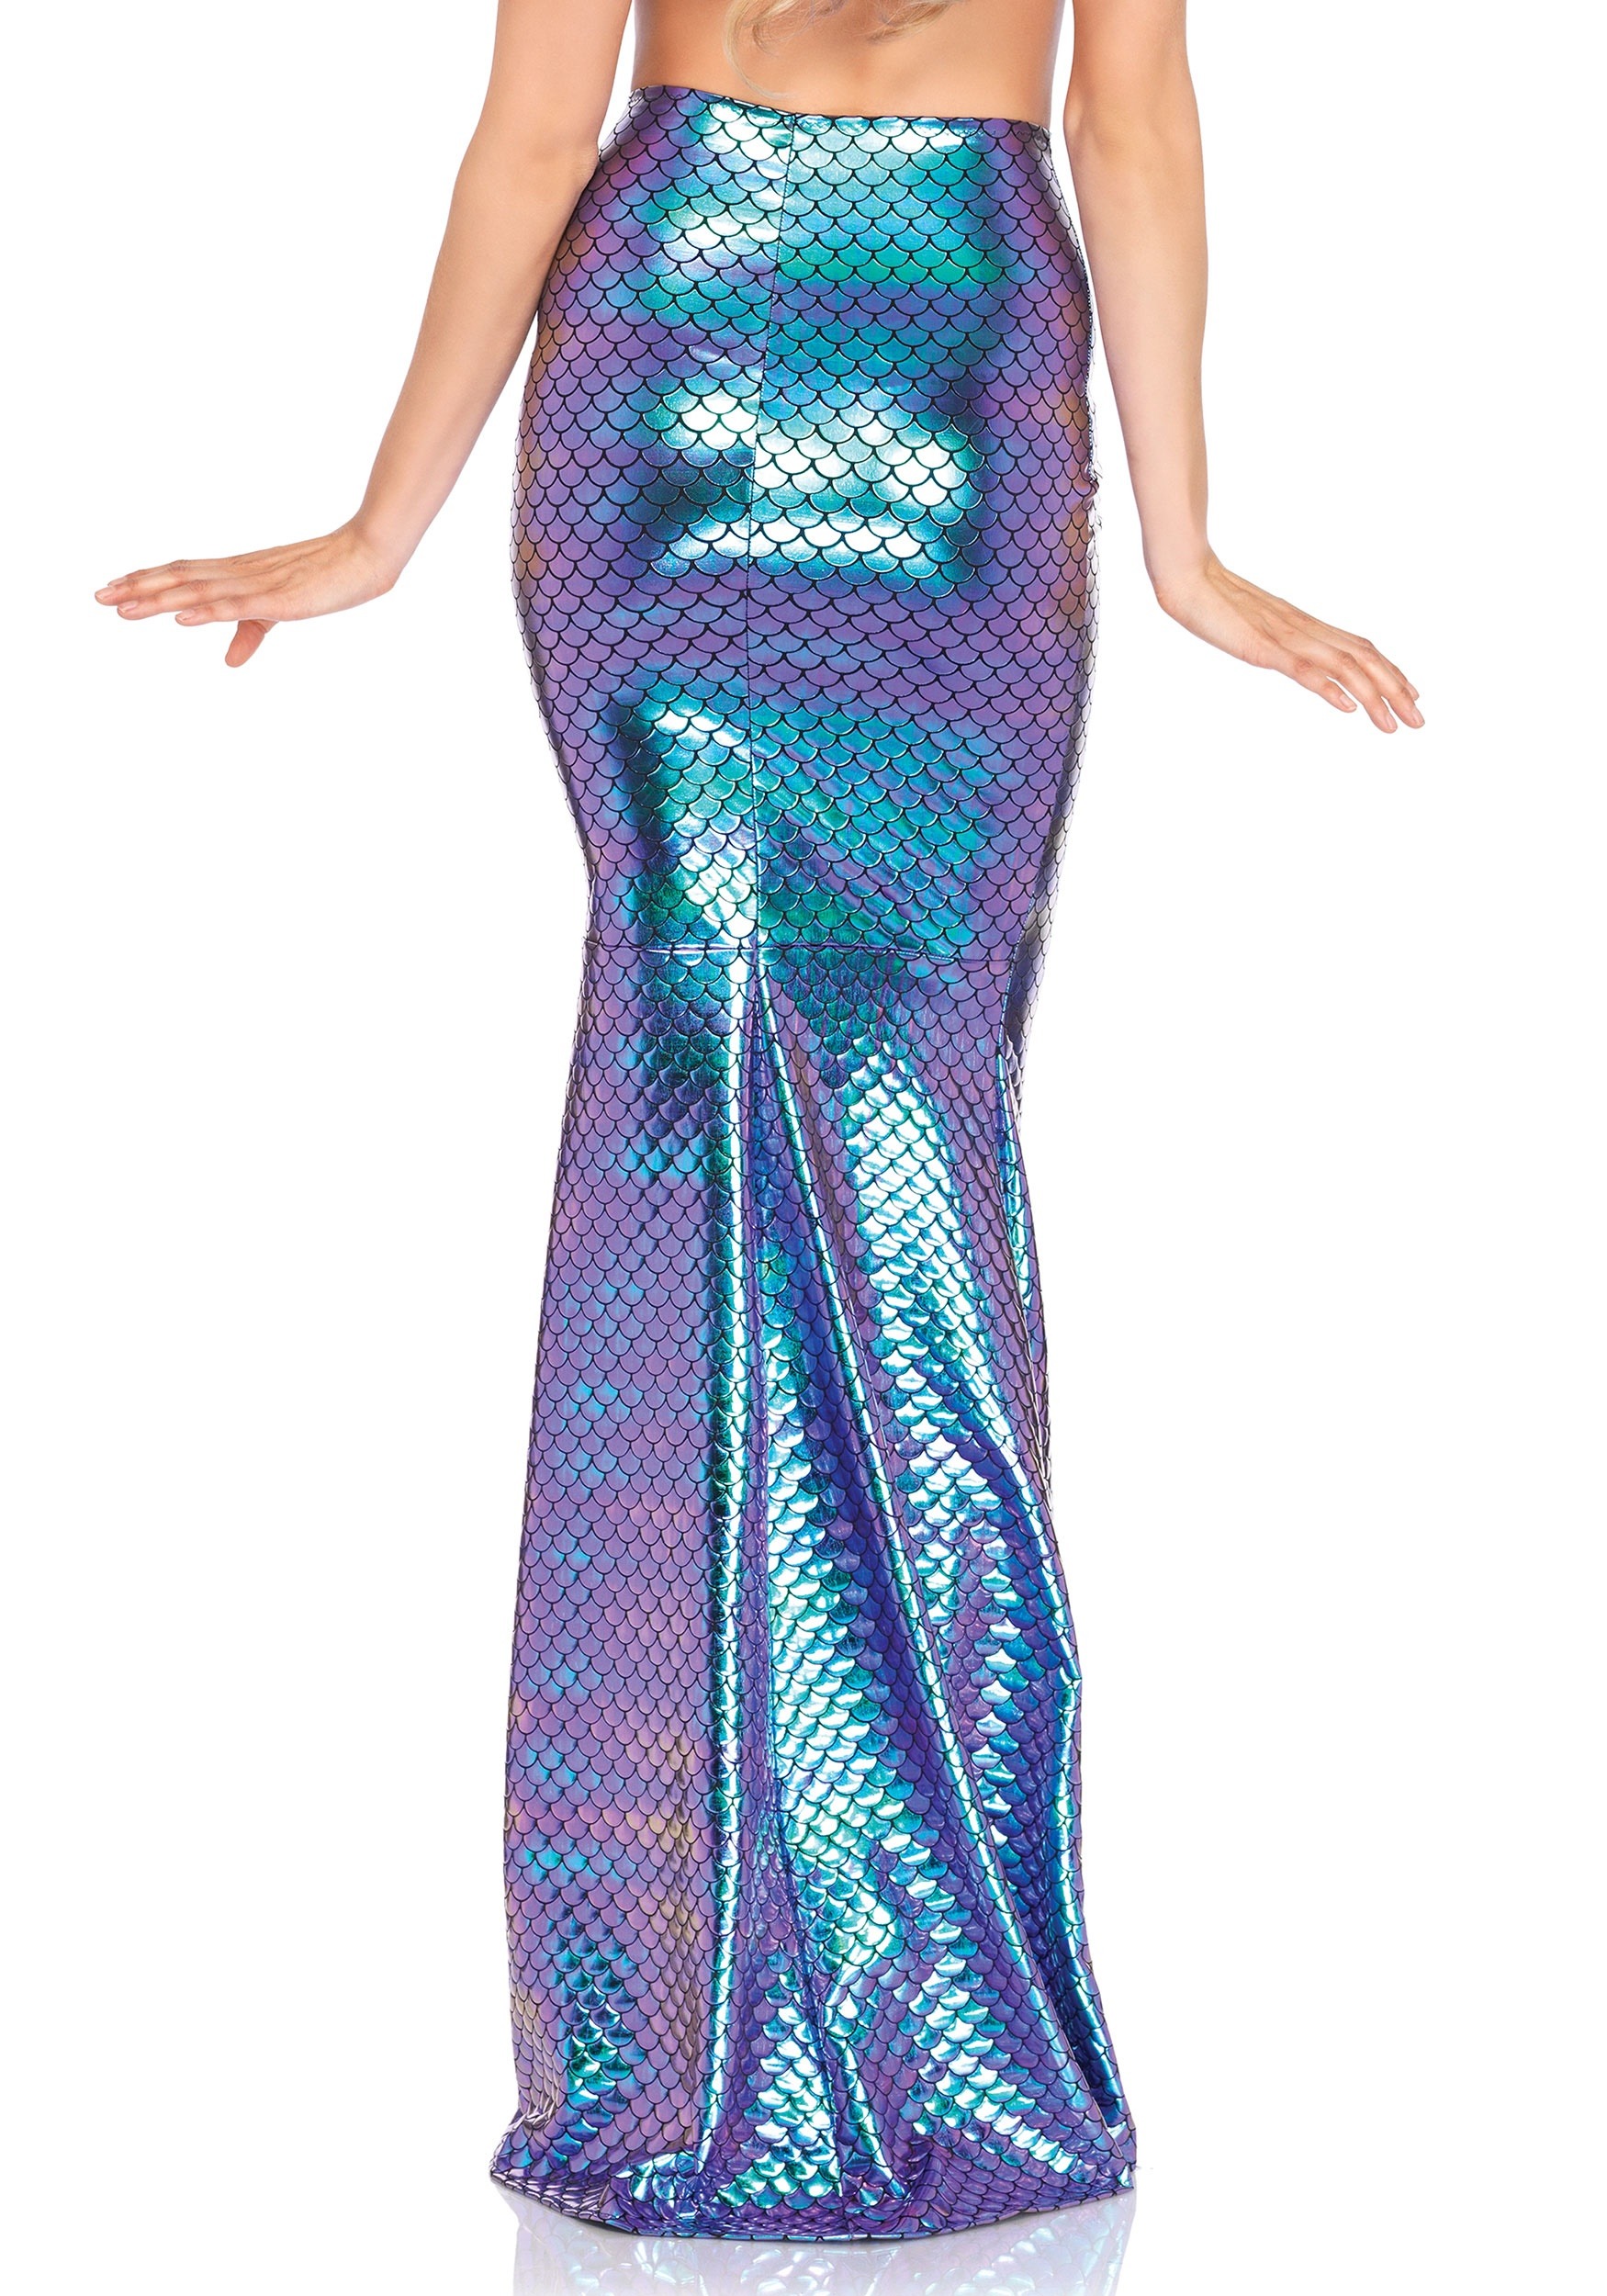 Mermaid Tail Deluxe Skirt